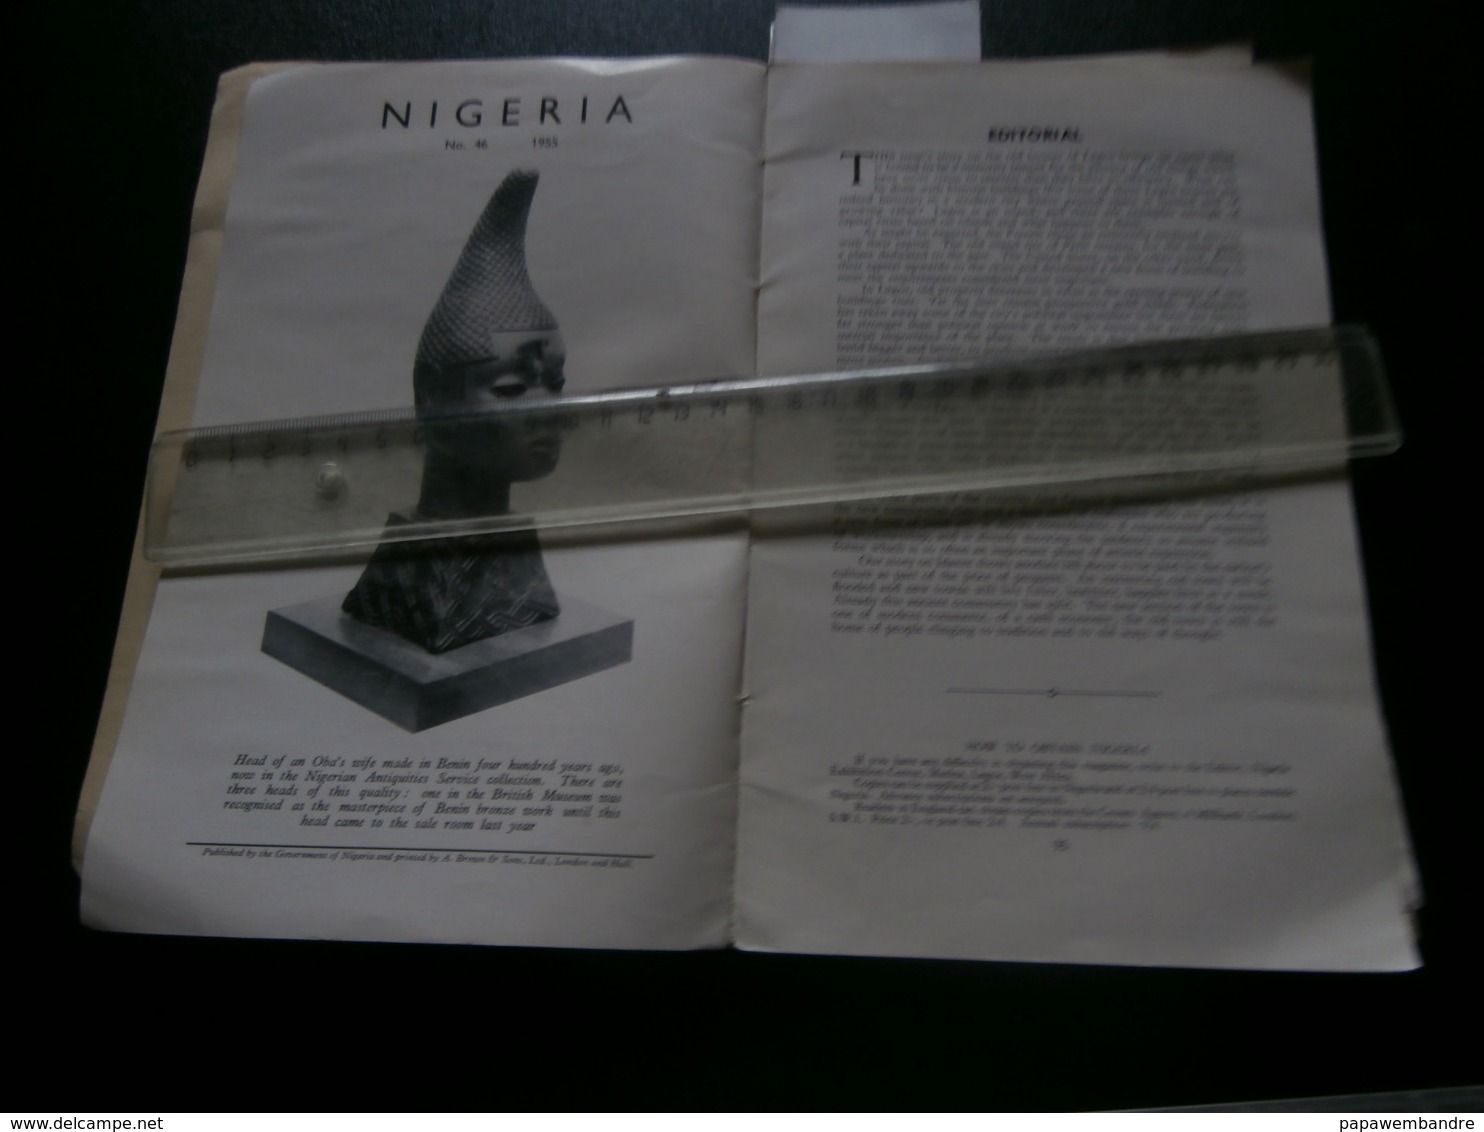 Nigeria 46 (1955) Lagos, Yoruba, Iseyin, Idanre, Ulli Beier, C B Dodwell, Murray - Geschiedenis